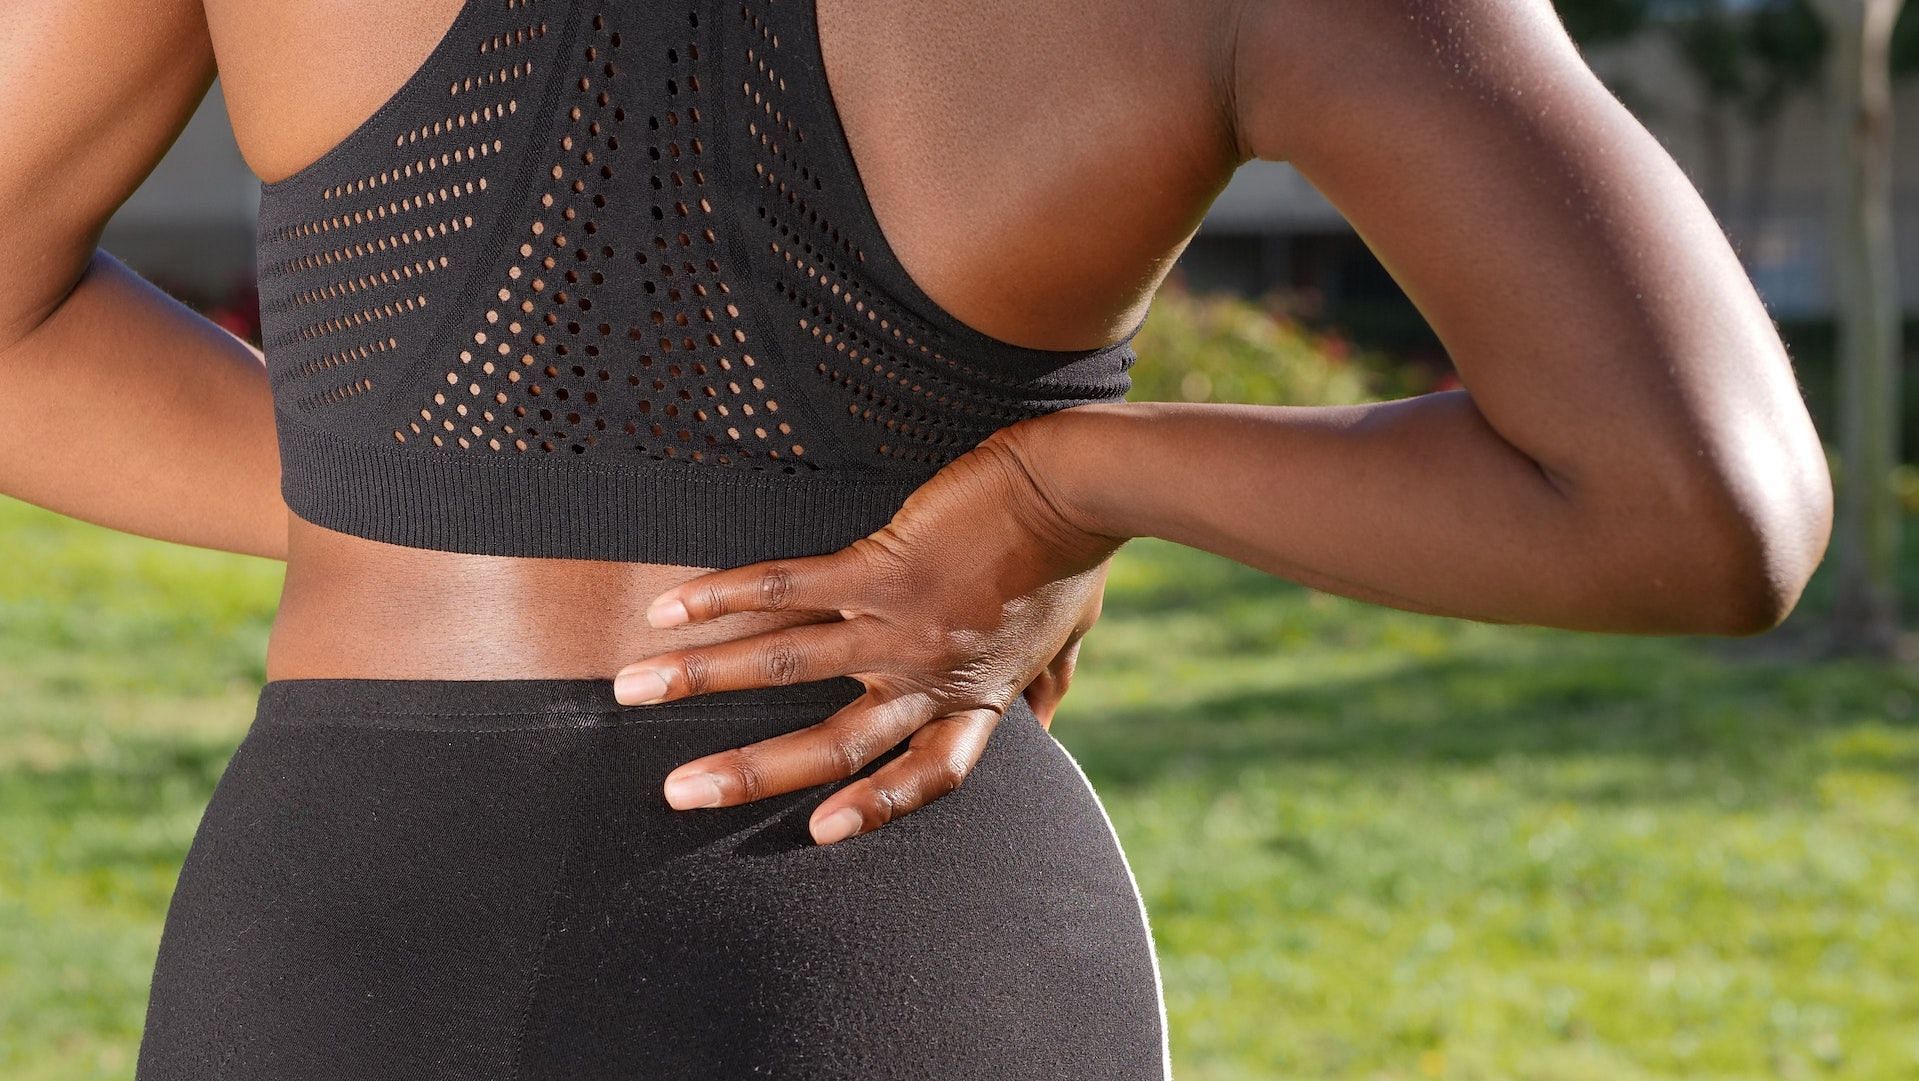 Lower back pain can be a symptom of anterior pelvic issues. (Photo via Pexels/Kindel Media)